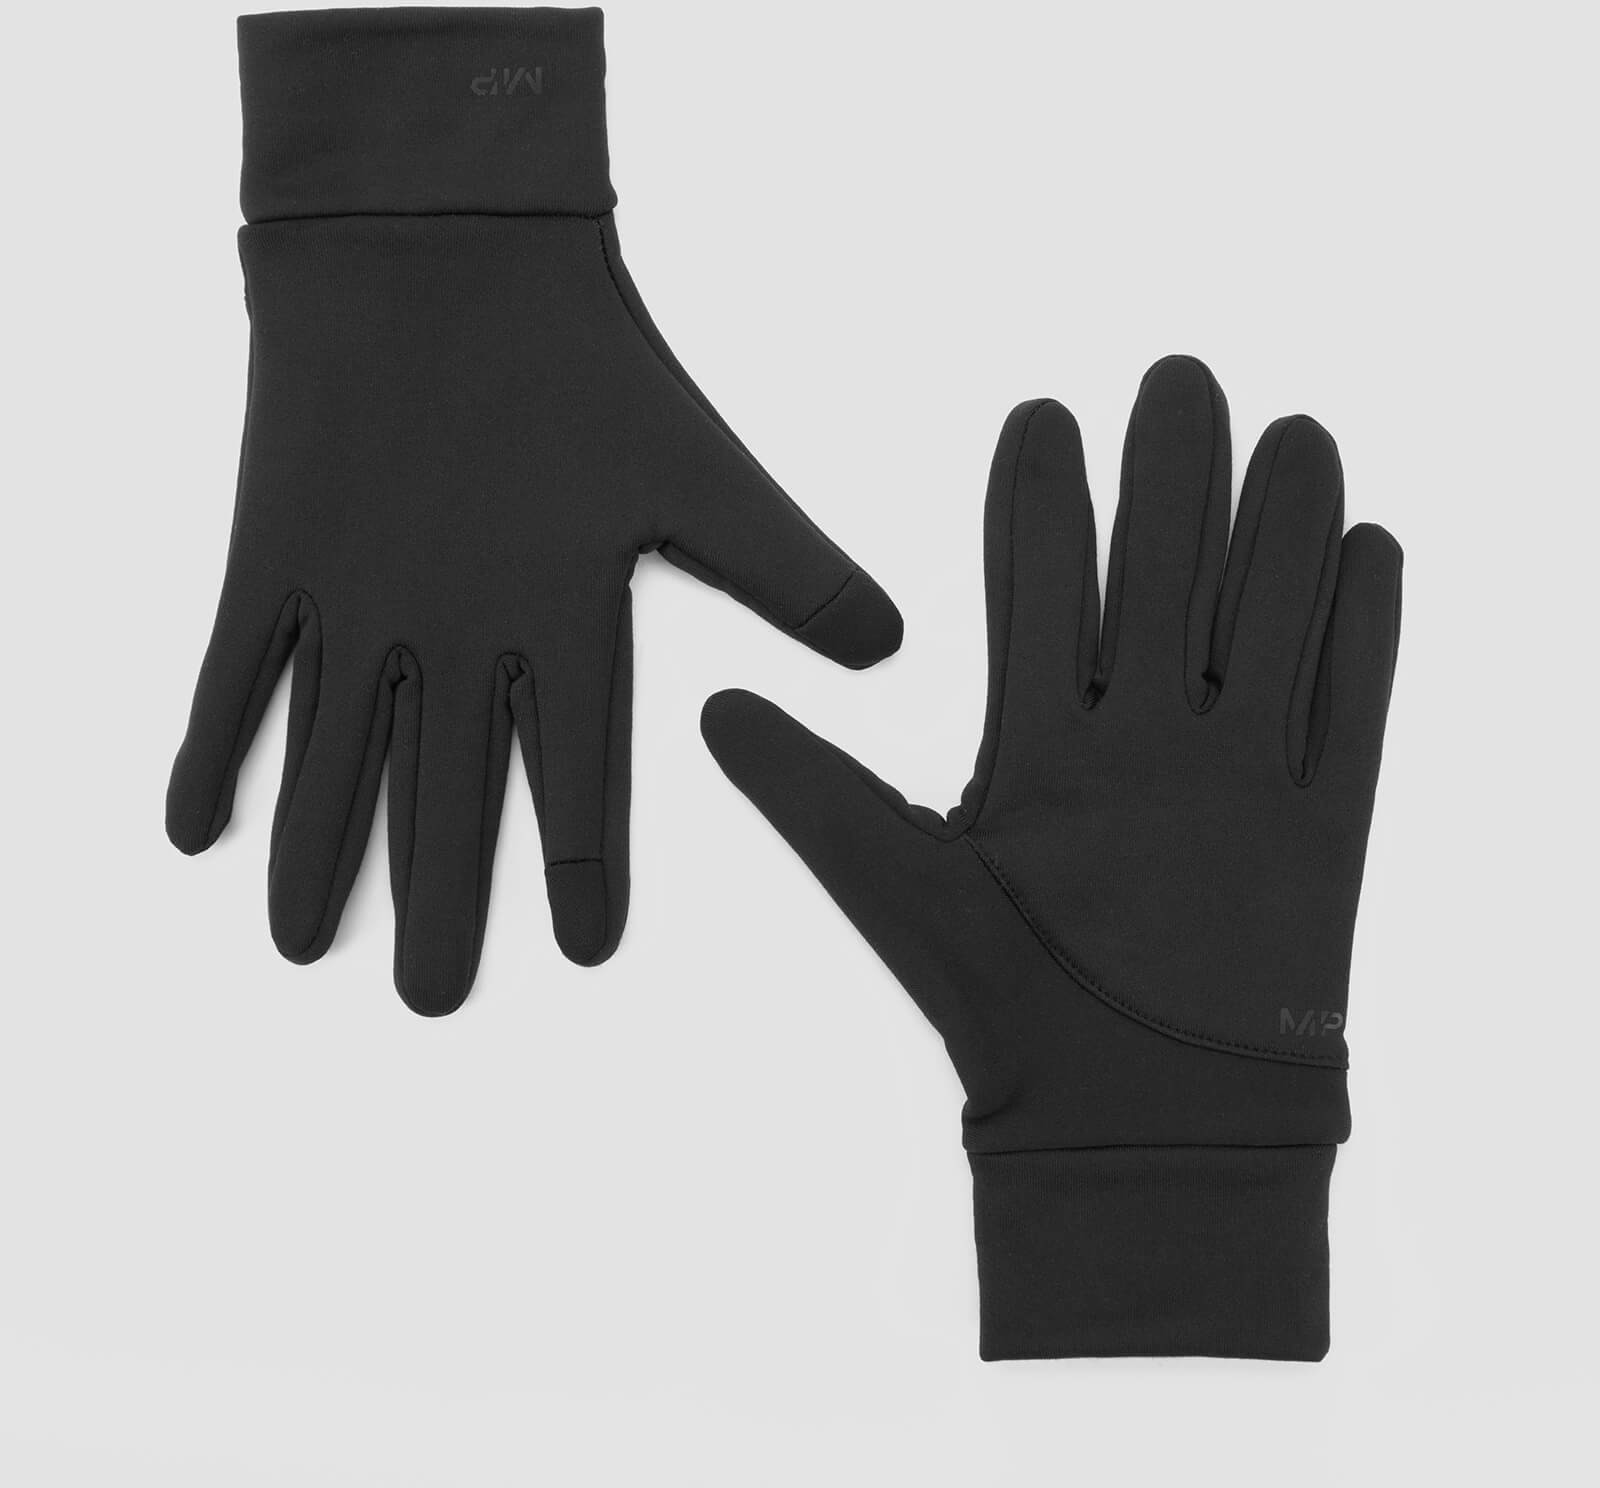 MP MP Reflective Running Gloves - Black - M/L